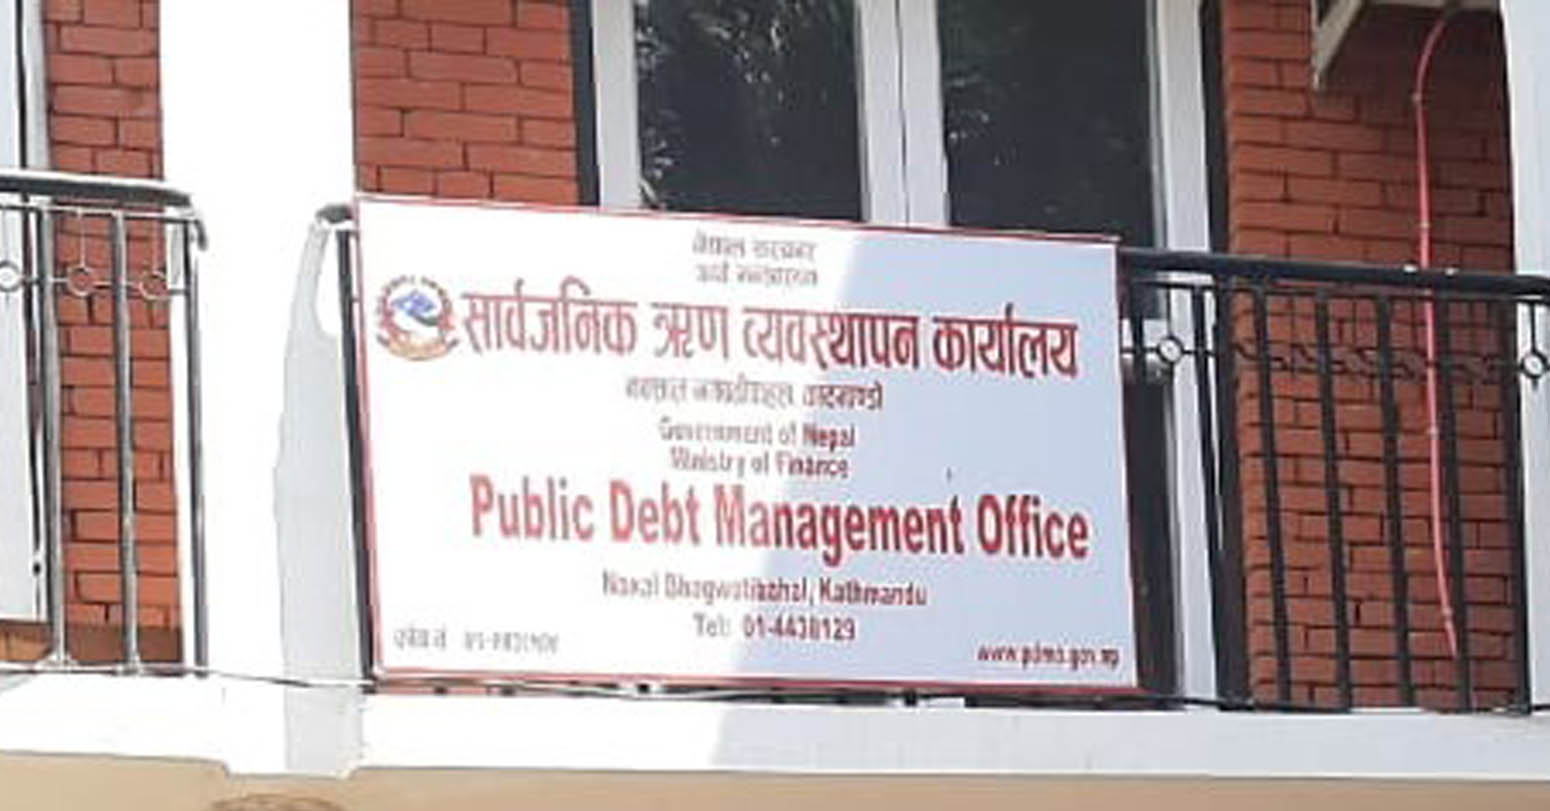 Nepal’s sovereign debt exceeds Rs 2400 billion